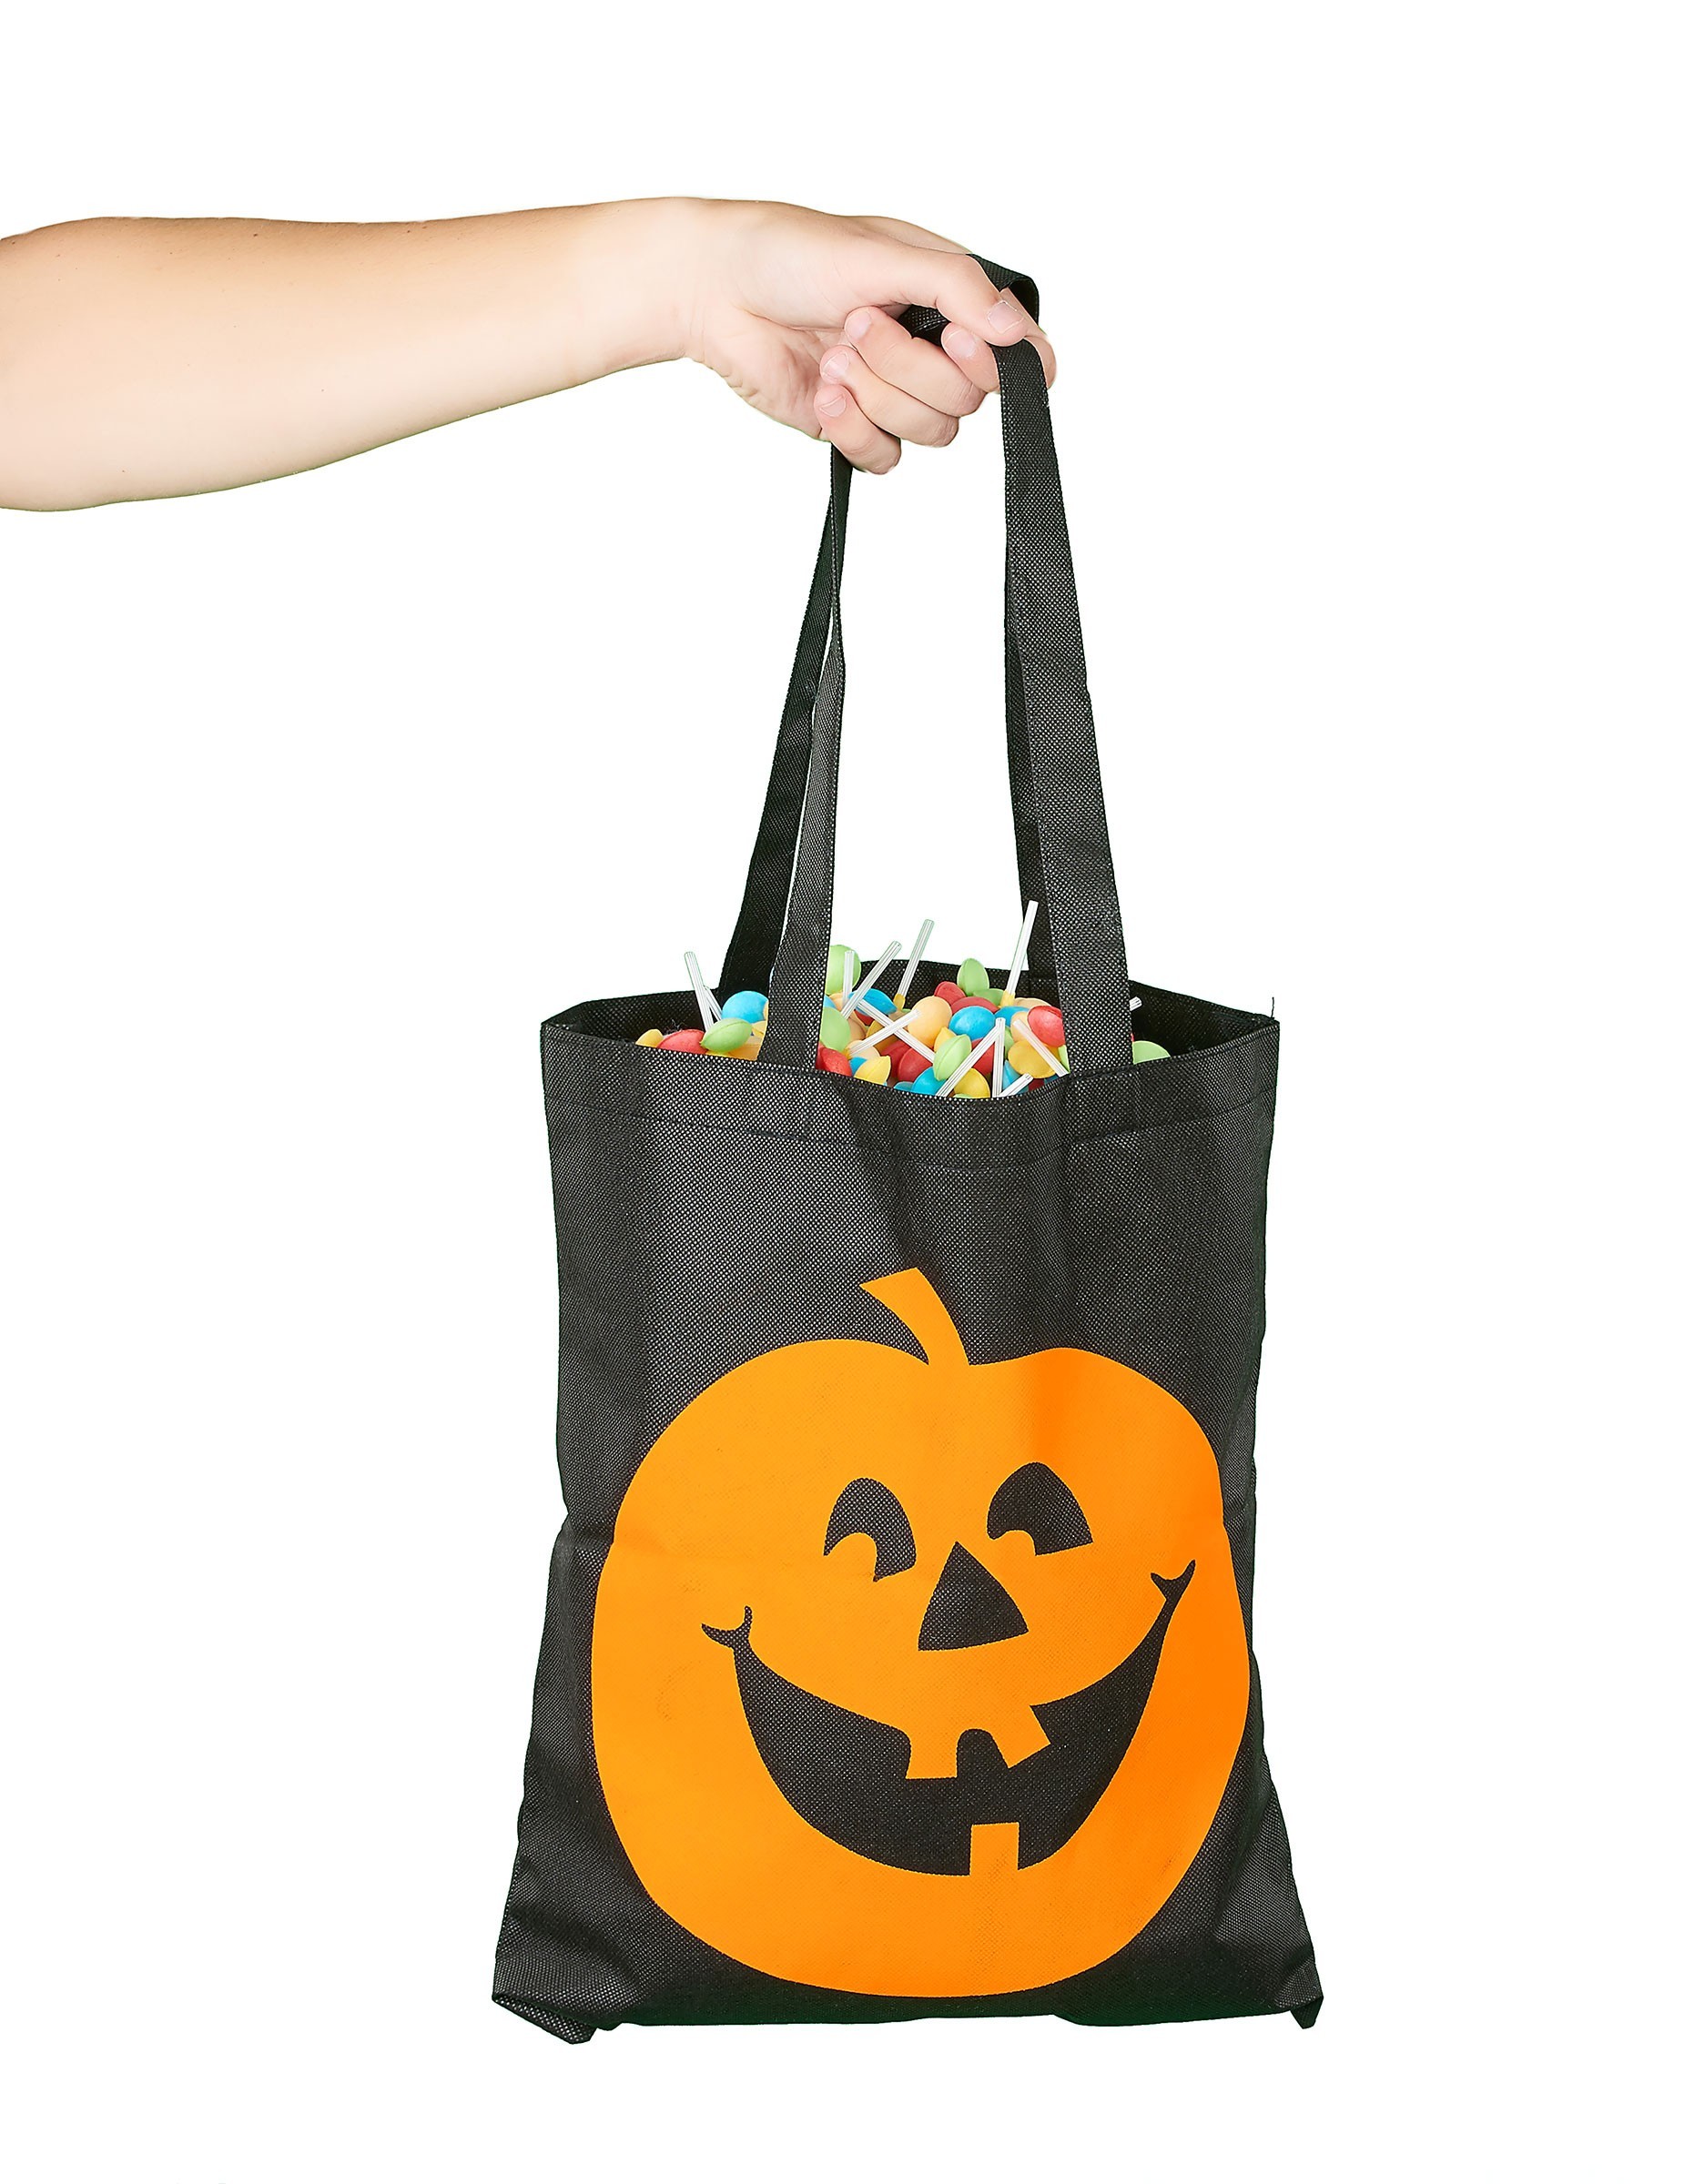 grand-sac-halloween-bonbons